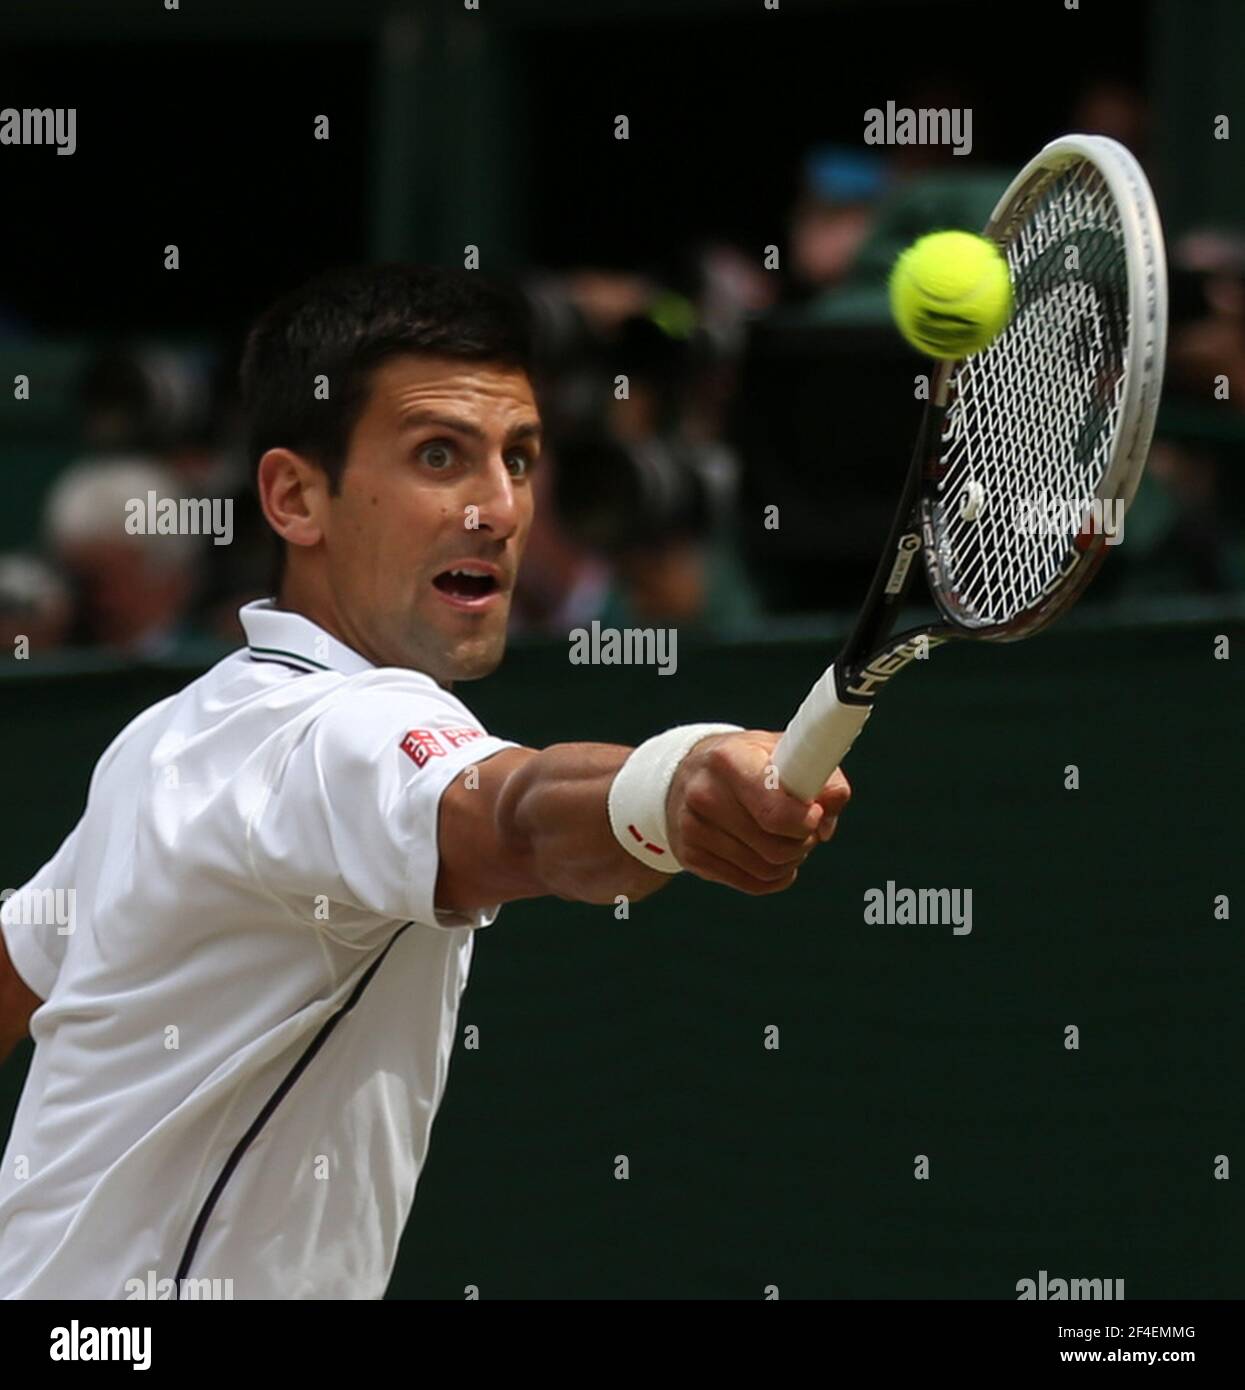 LONDON, ENGLAND - Juli 06: Novak Djokovic aus Serbien besiegt Roger Federer  von der Schweiz während des Herren Singles Finale an Tag 13 der Wimbledon  Lawn Tennis Meisterschaften bei den All England